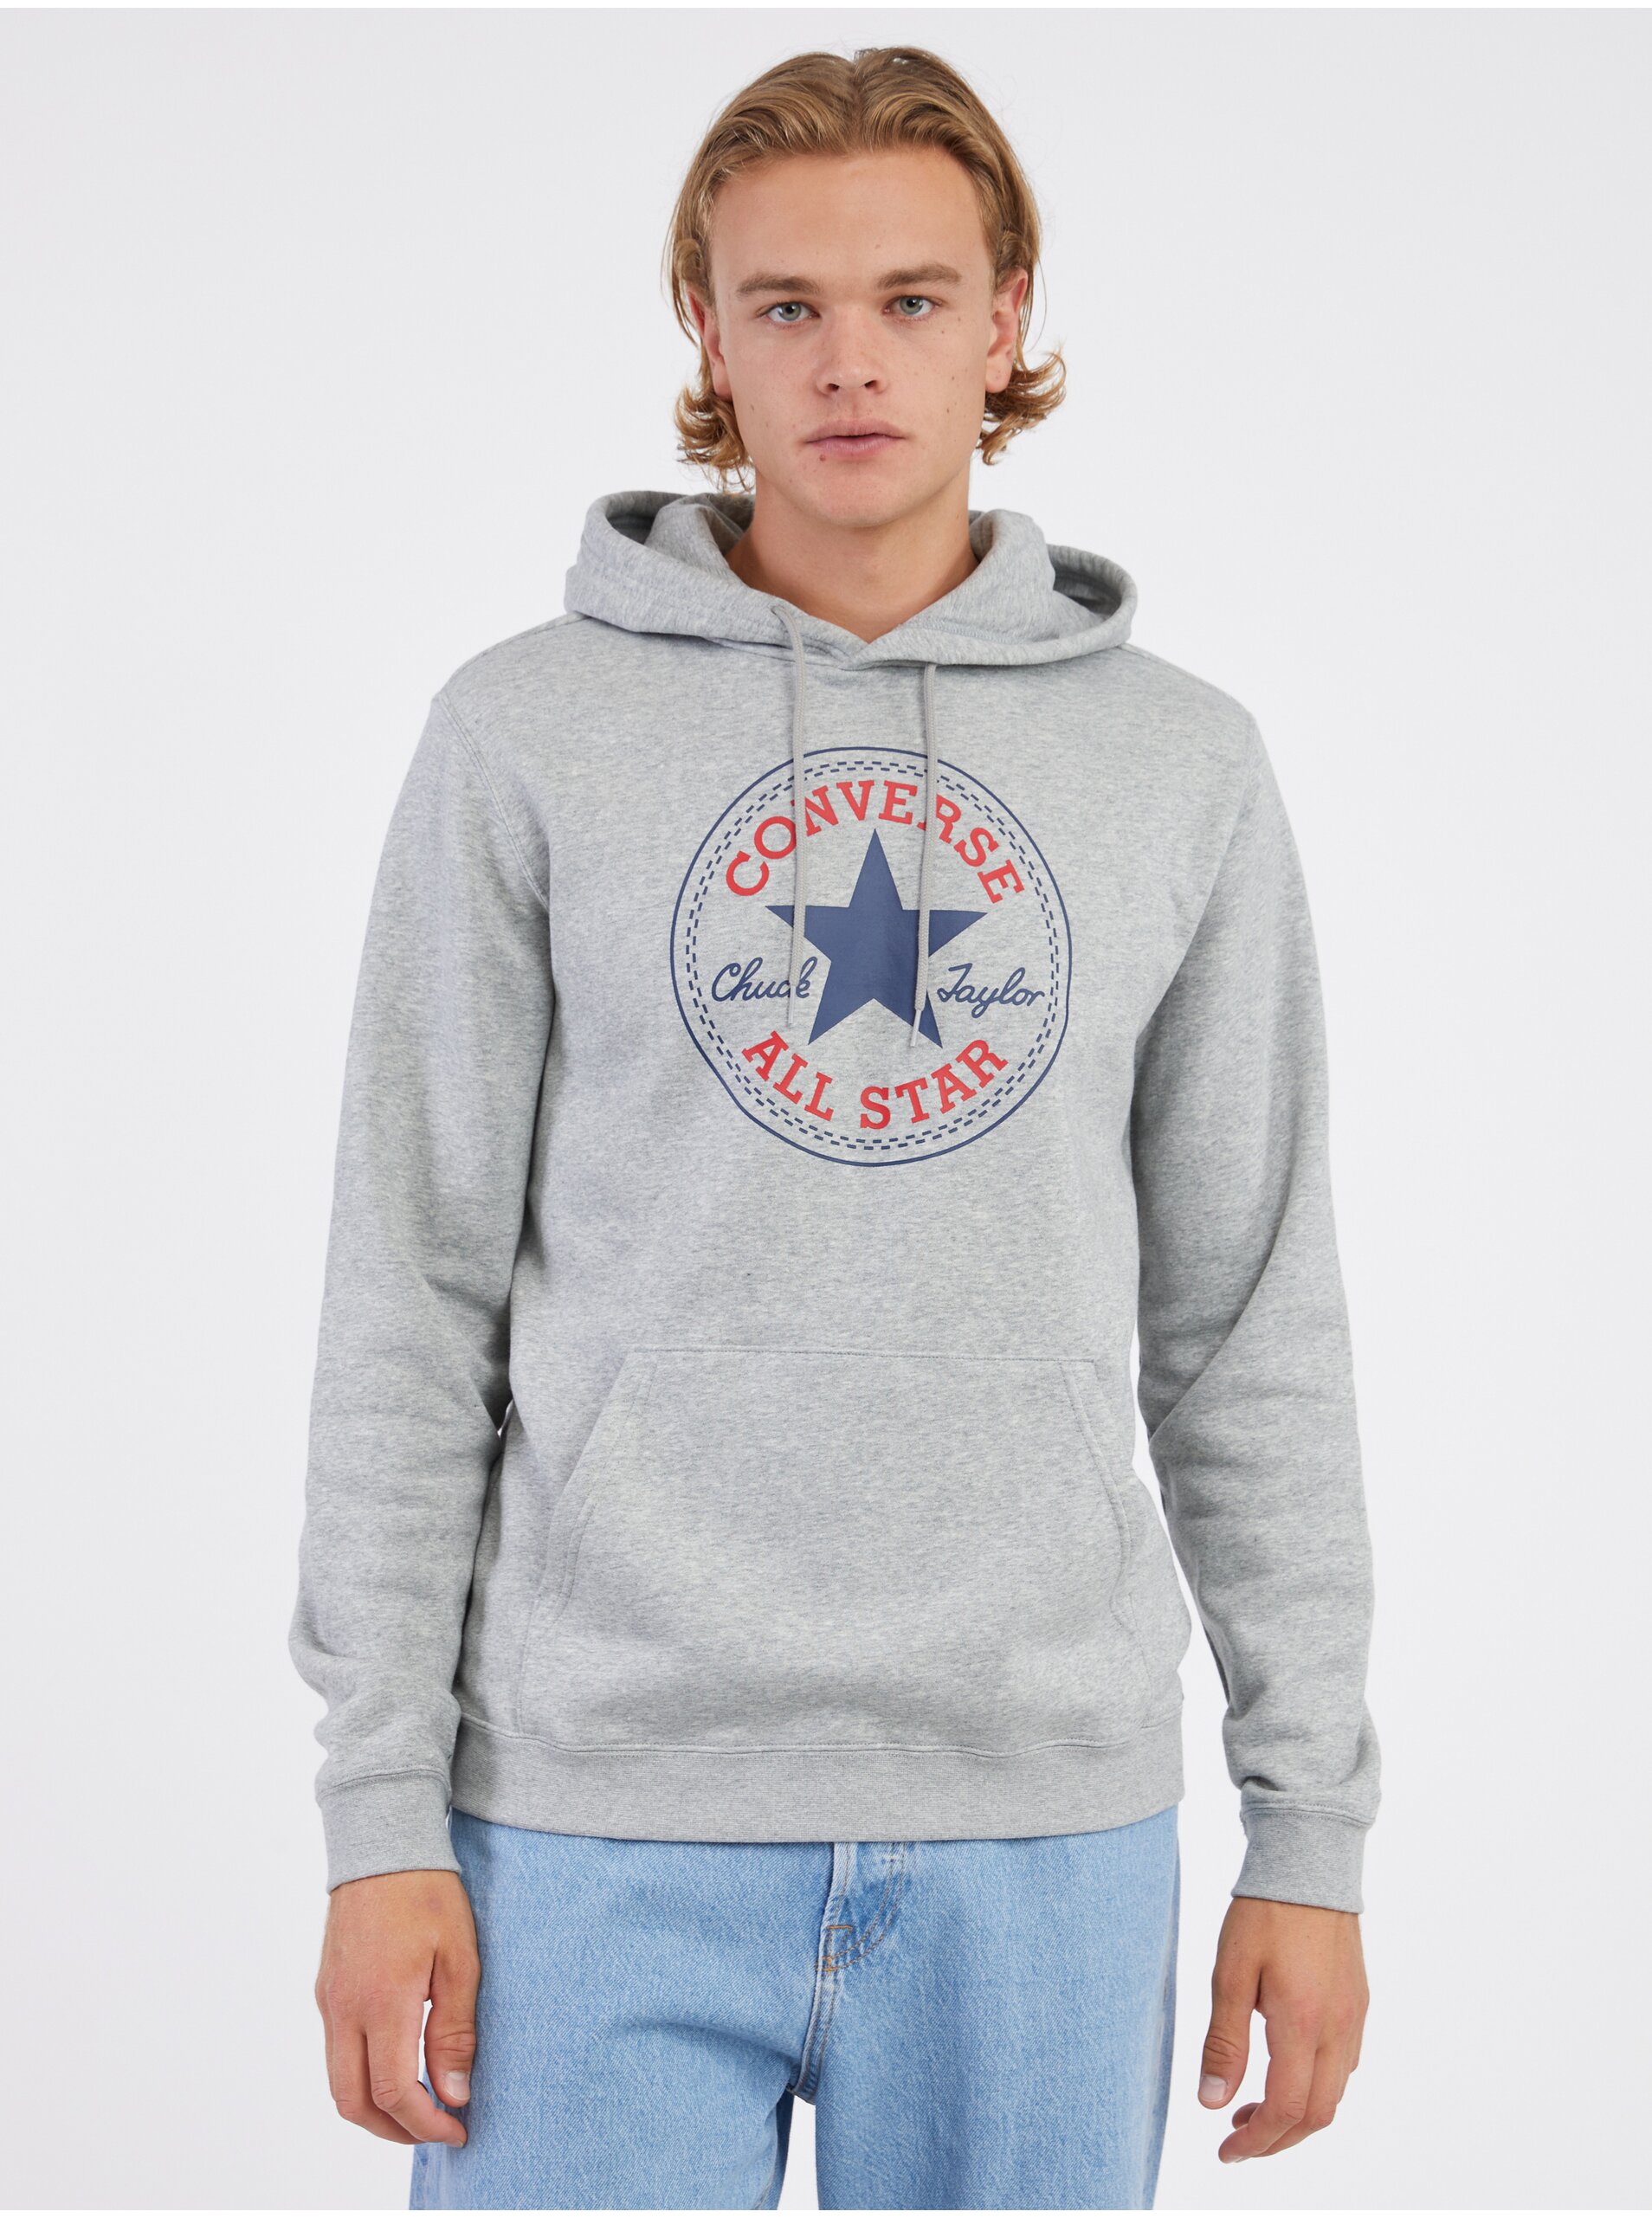 Converse Go-To All Star Patch Grey Unisex Sweatshirt Sweatshirt - Men